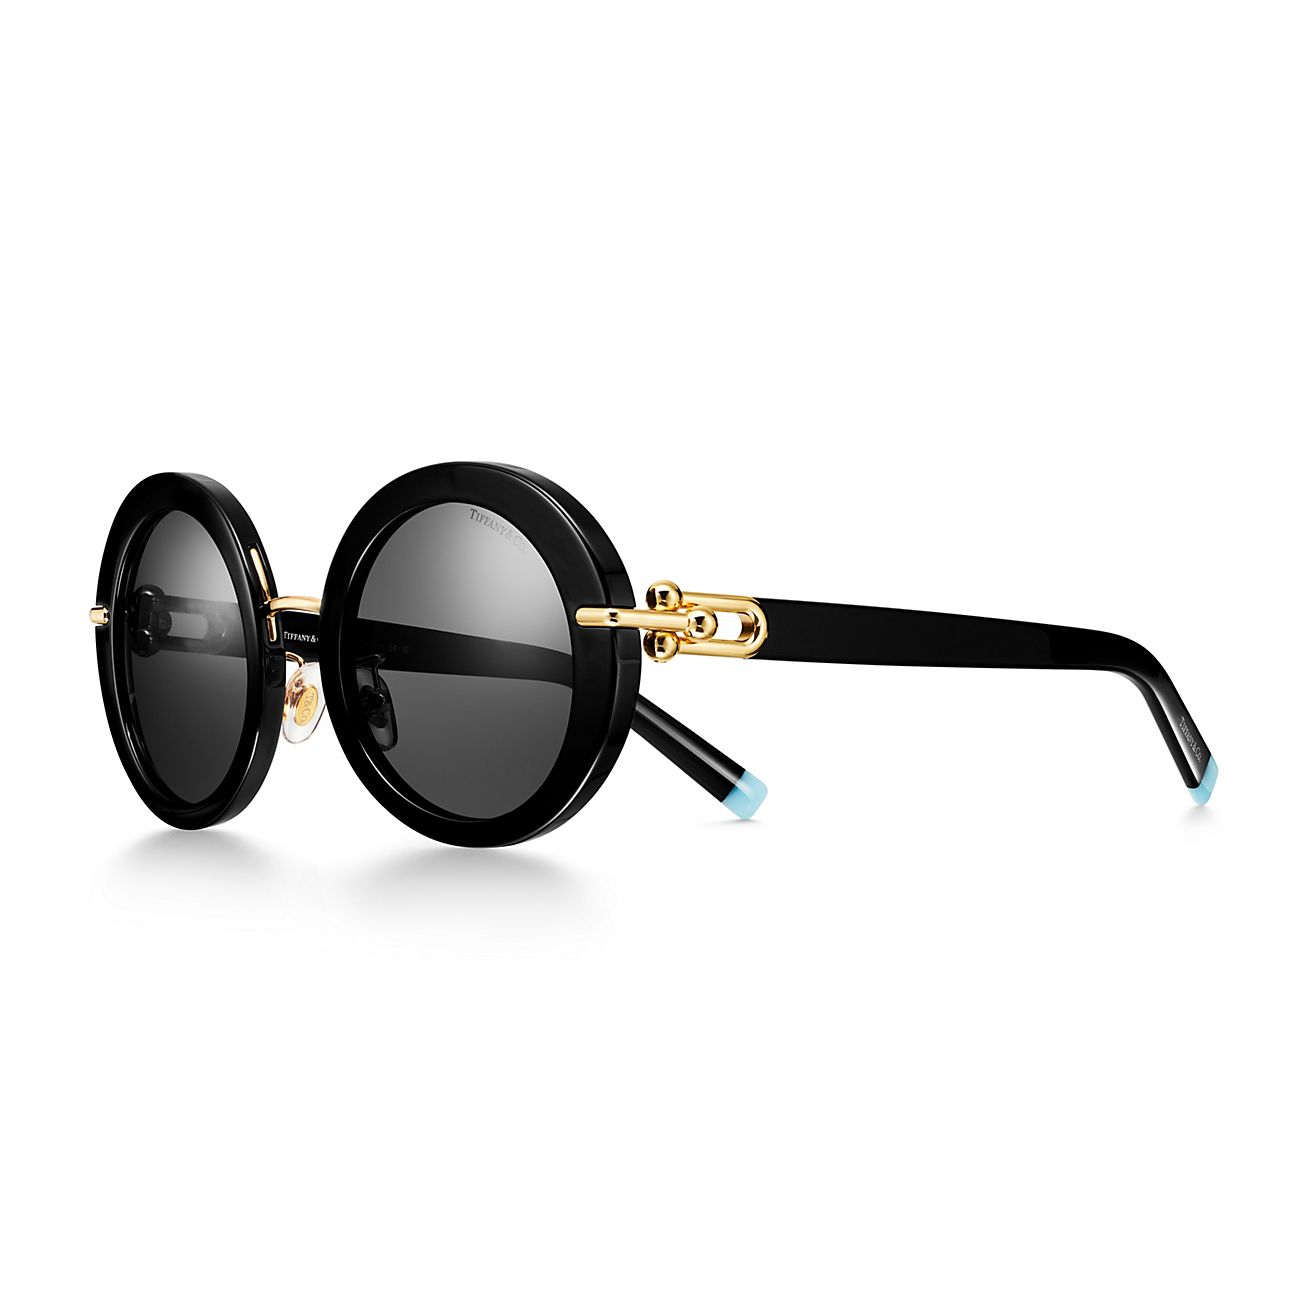 Tiffany HardWear Sunglasses in Black Acetate with Dark Gray Lenses